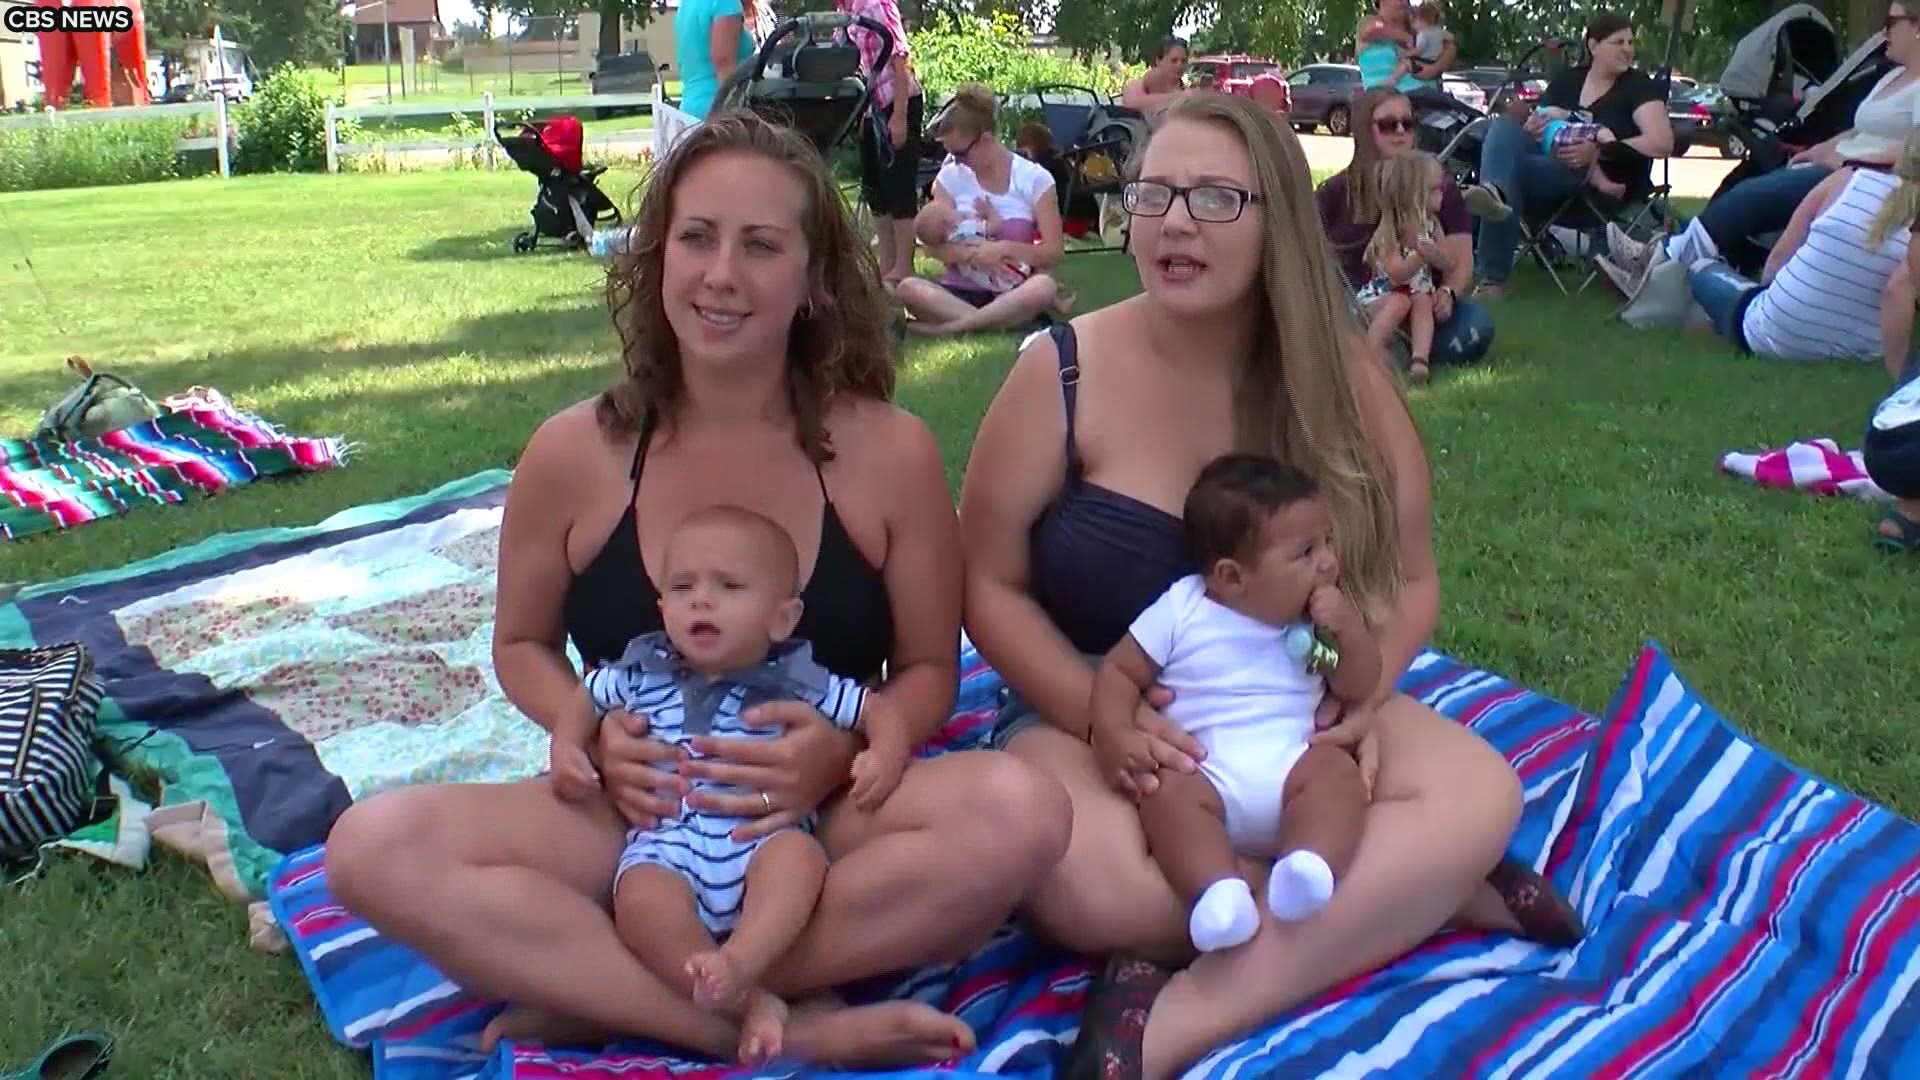 Cops Called On Women Nursing Their Kids At Pool